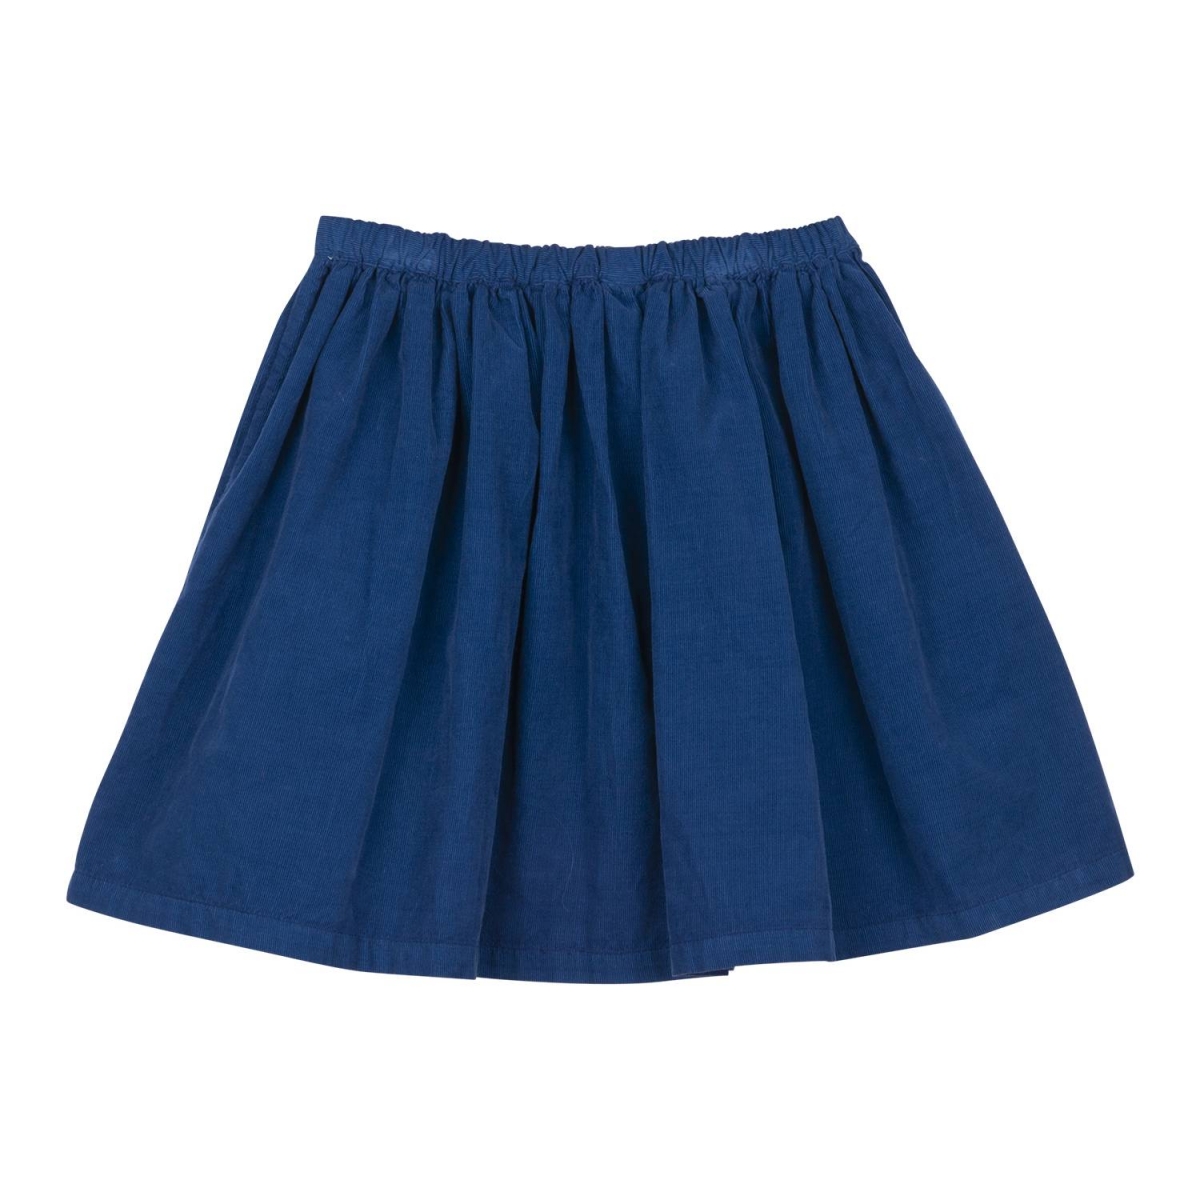 Bonton Skirt Jupe f pat blue H21FRAMBOI00U086 